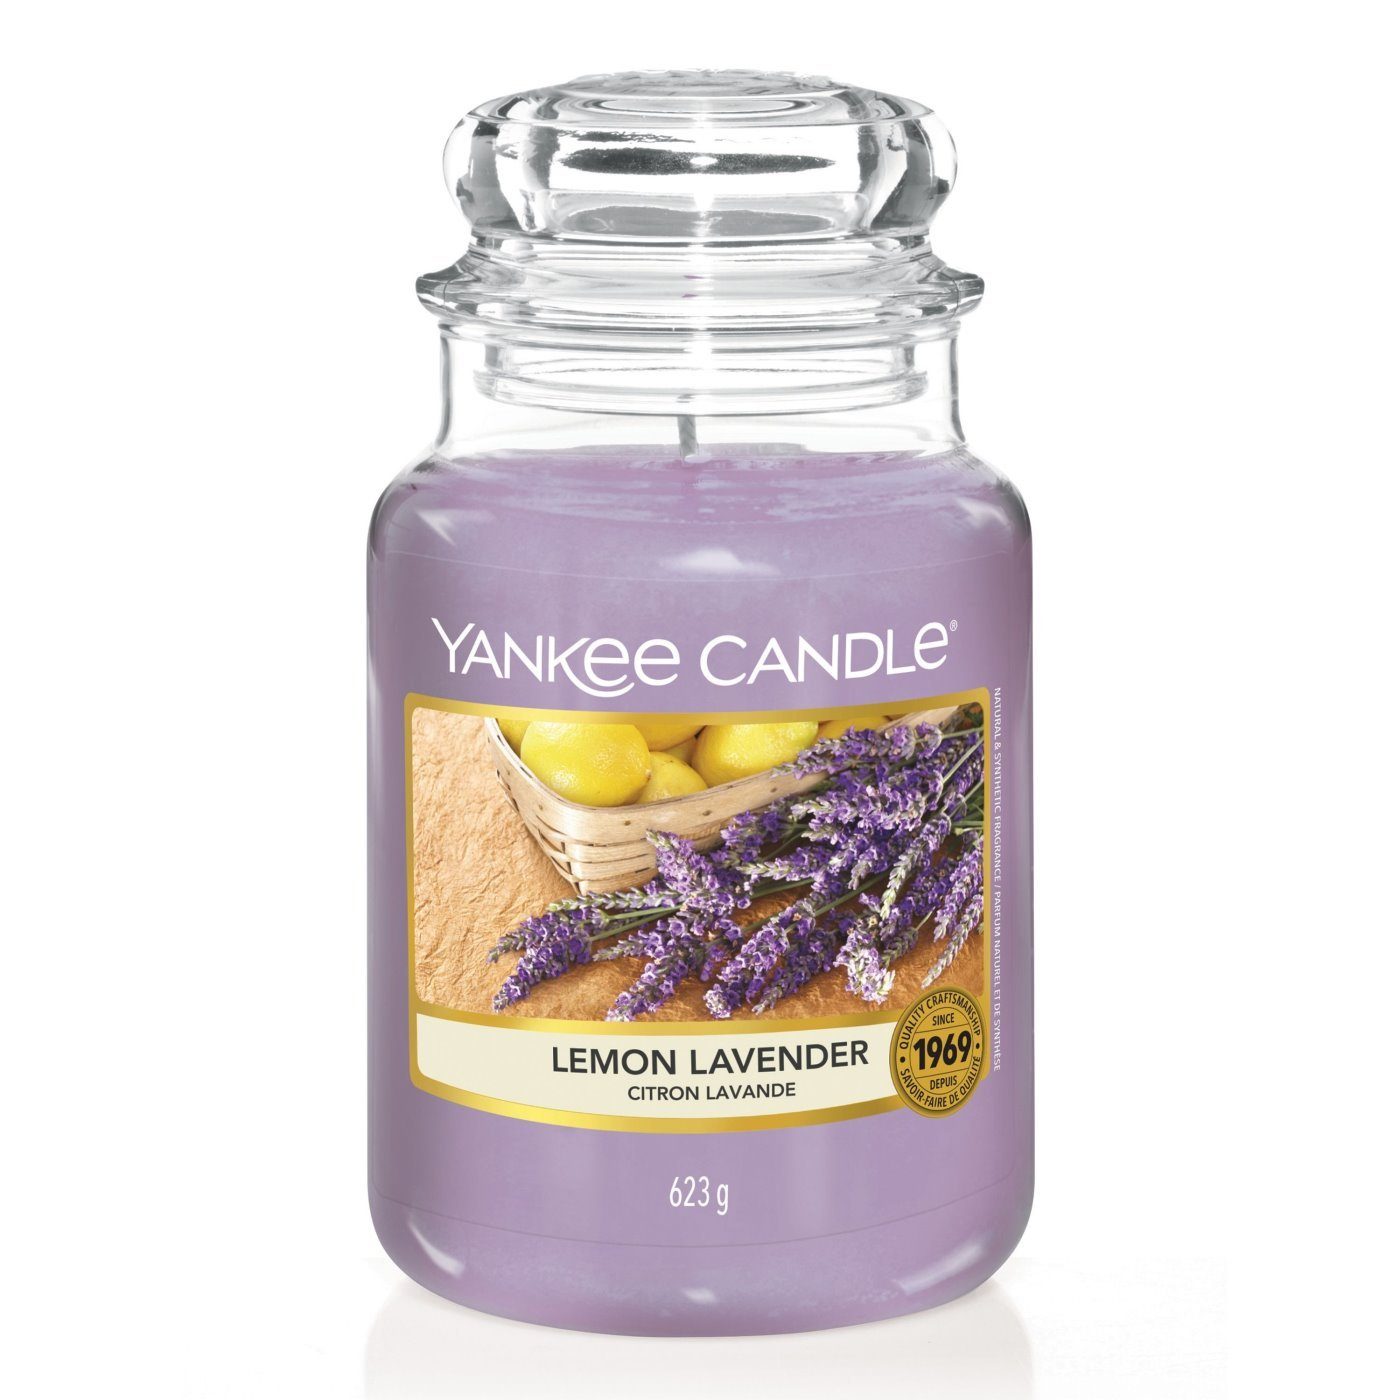 Yankee Candle Duftkerze Lemon Lavender 623g - Duftkerze im Glas - 1 Stück